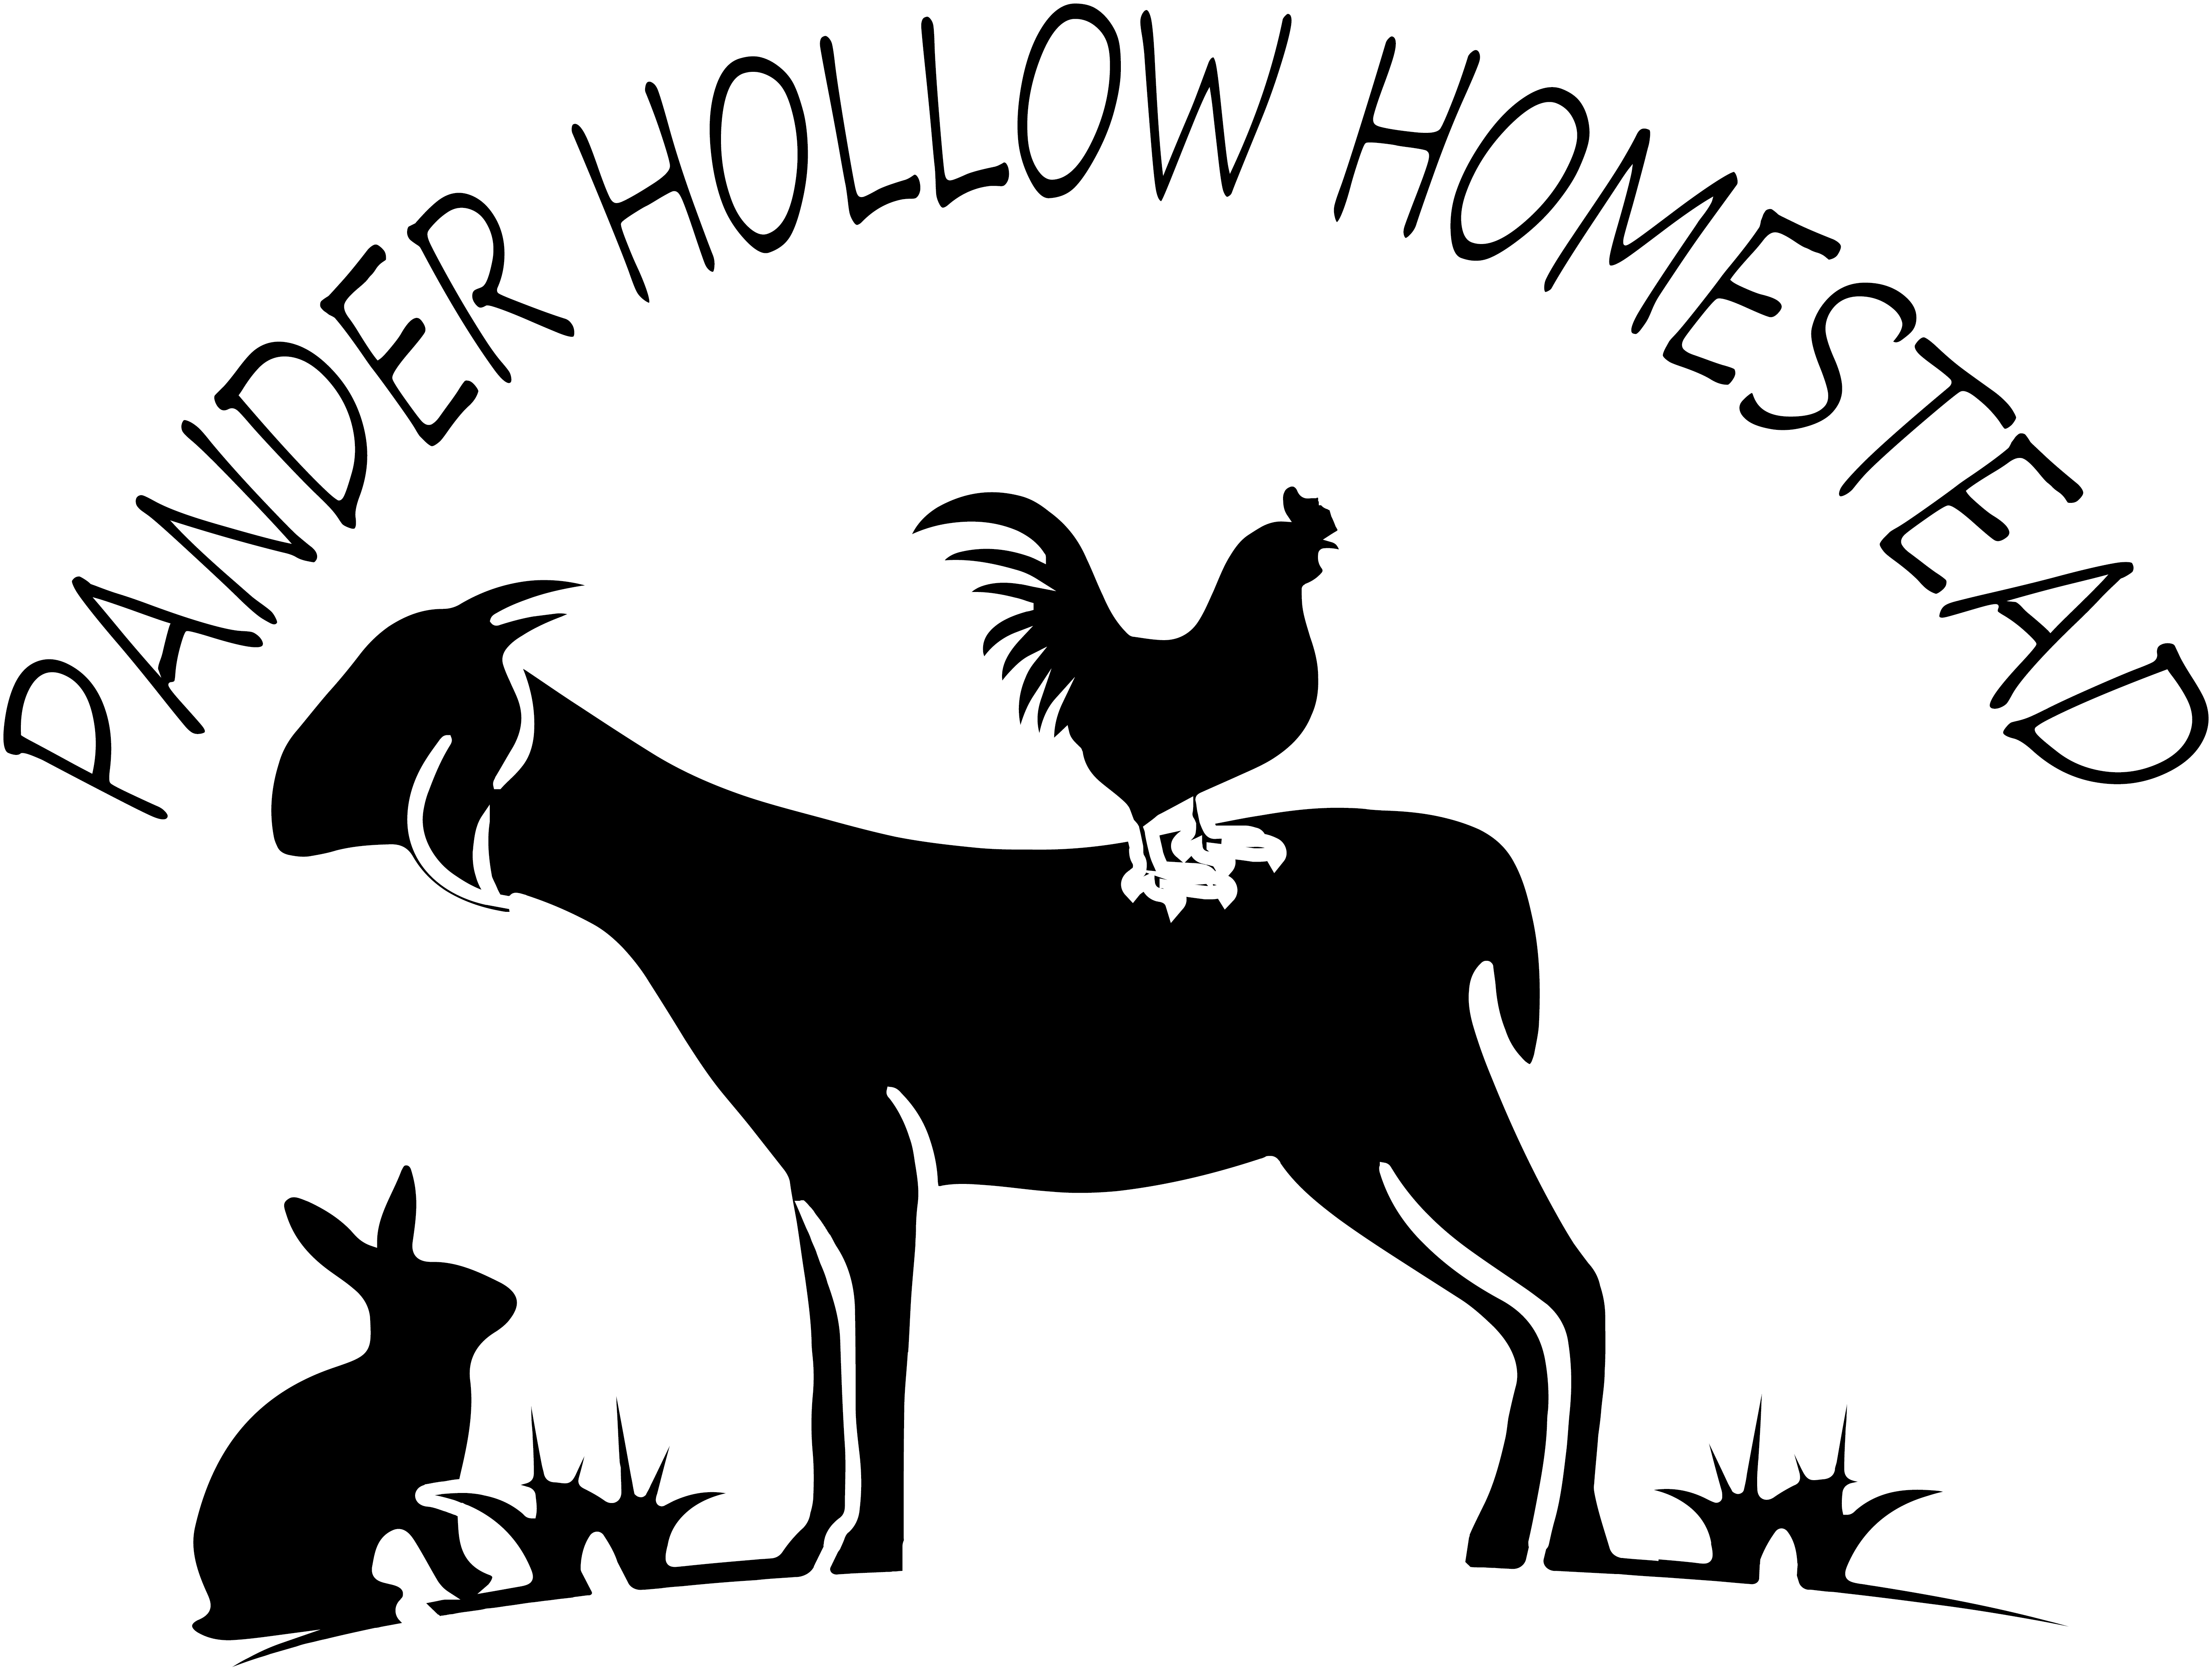 Pander Hollow Homestead